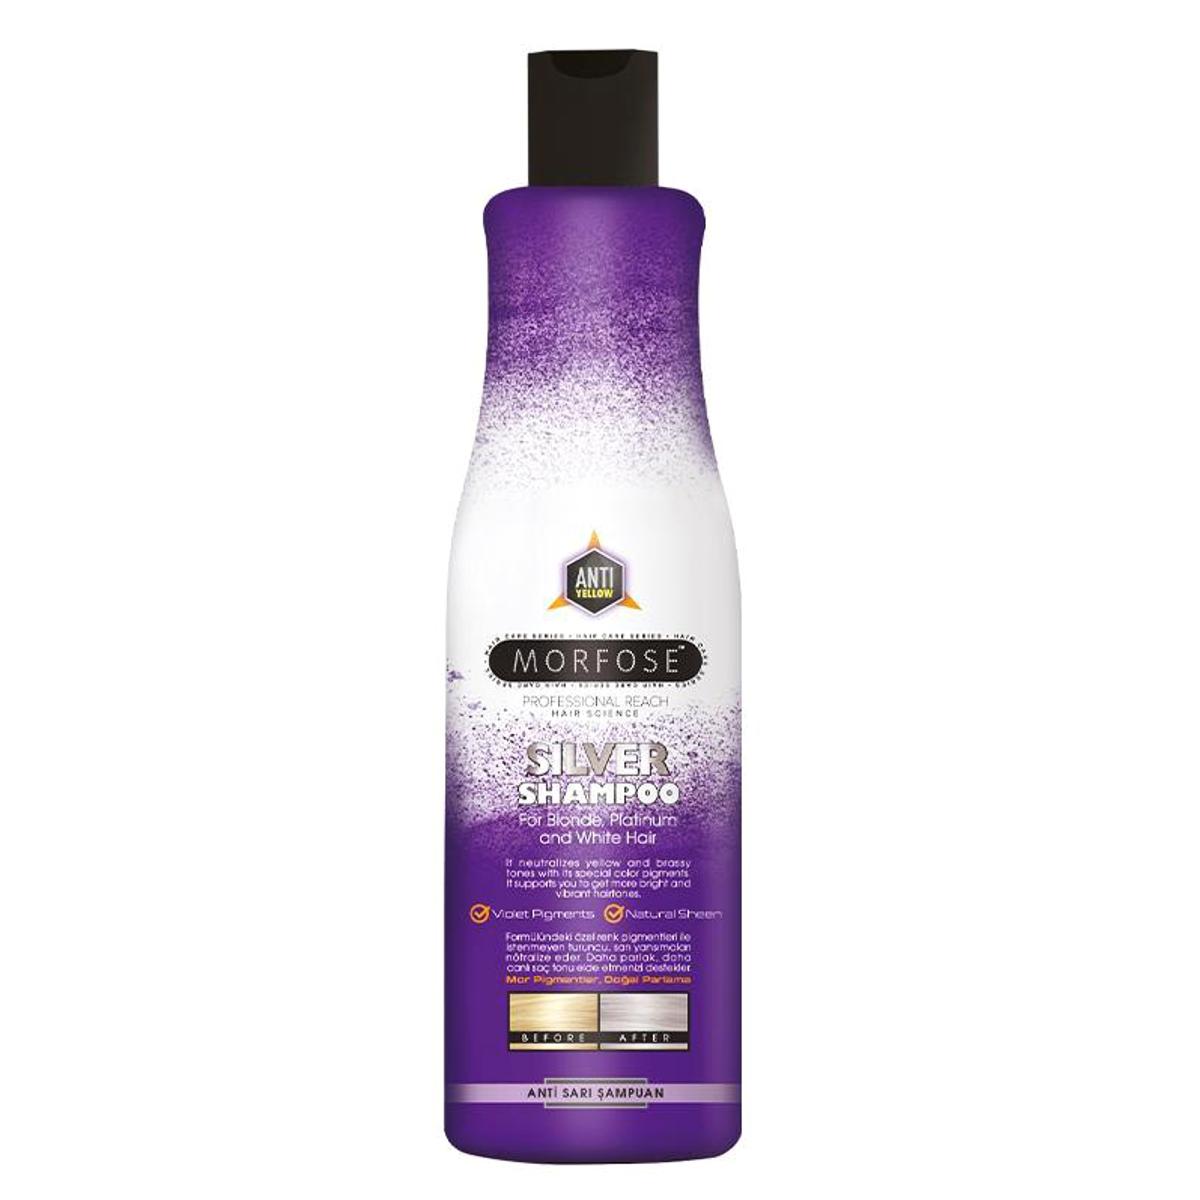 MORFOSE Silver šampon - Anti yellow 500ml